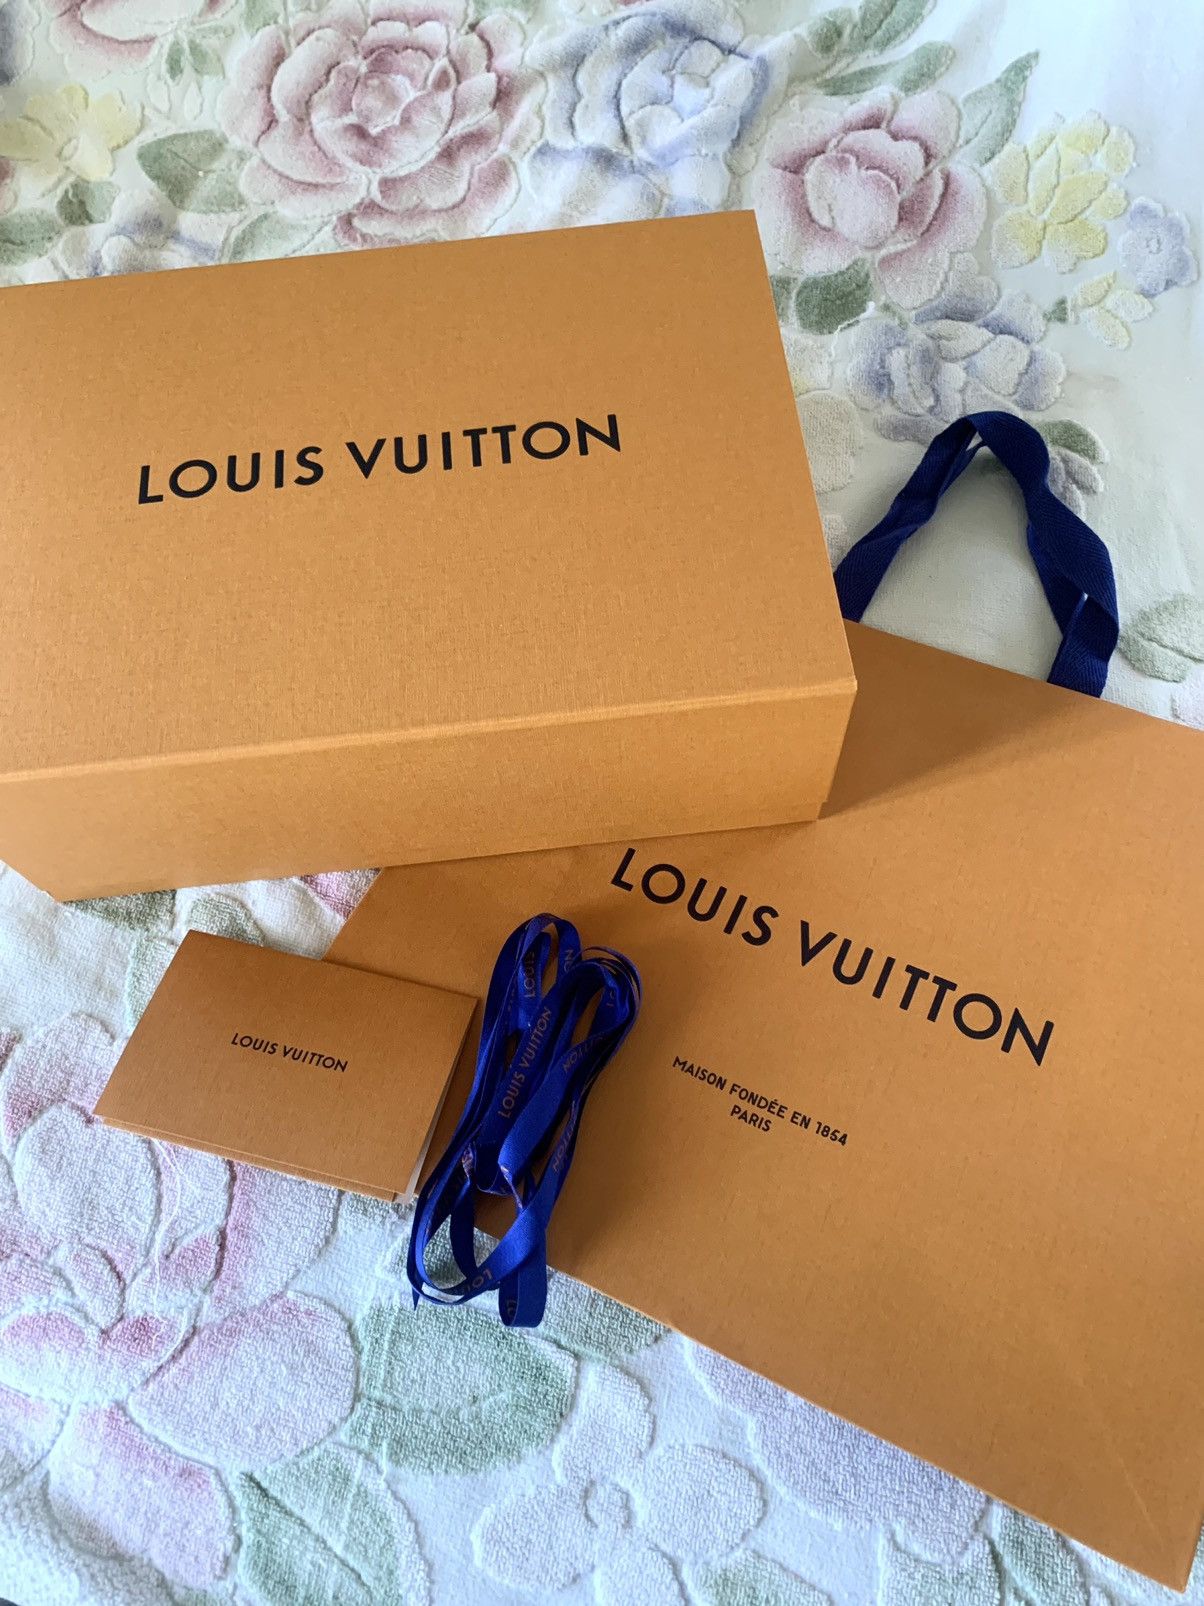 Louis Vuitton LOUISVUITTON Size: 34 inch 22AW DESTROYED CARPENTER BELL  BOTTOM DENIM RM222 JE0 HND90W Stroid Carpenter Bell Bottom Long Pants